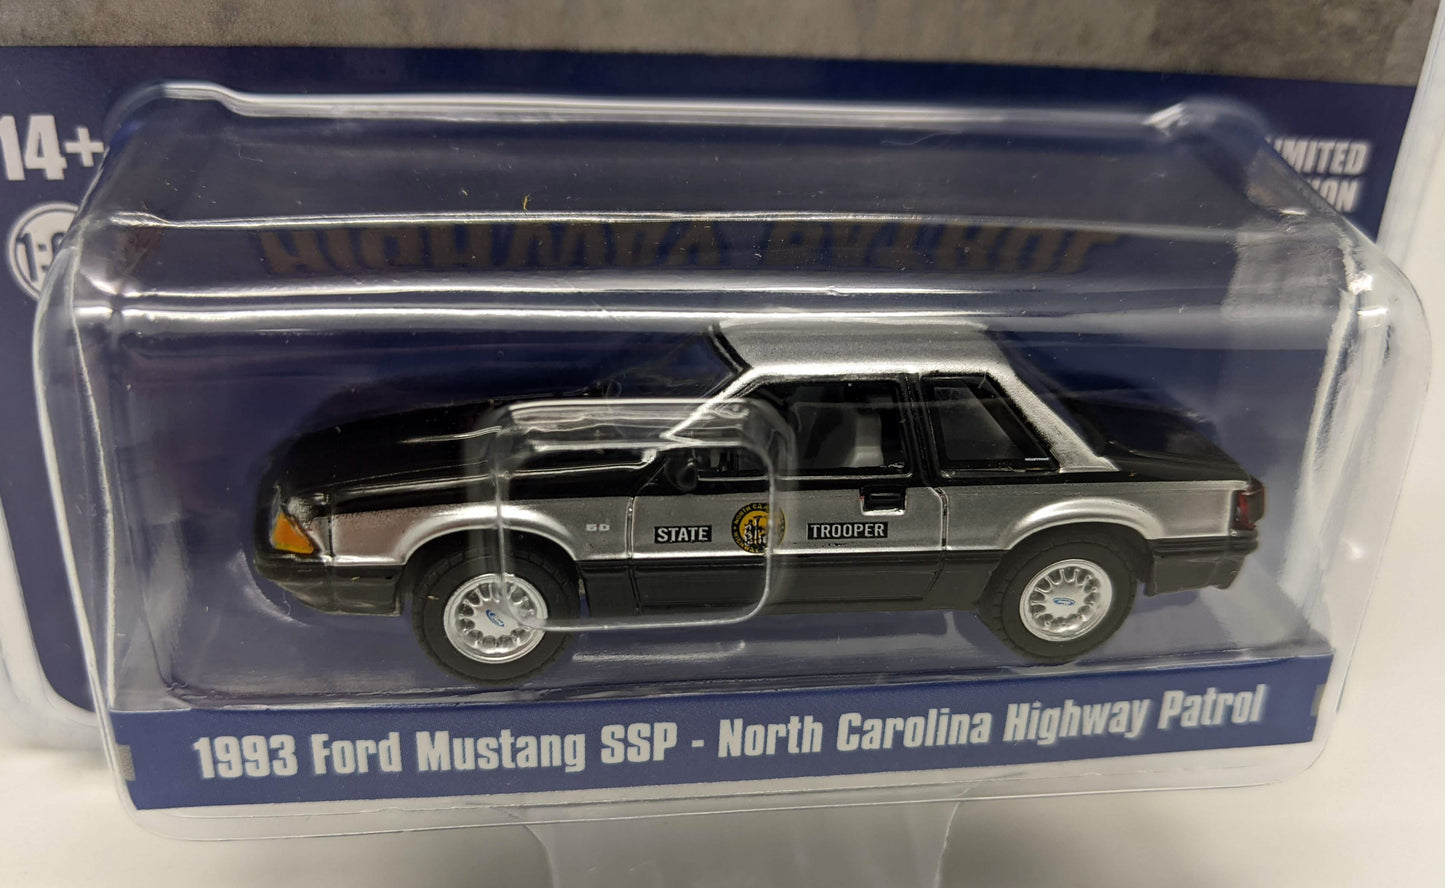 ACME - 1993 Ford Mustang SSP - North Carolina Highway Patrol